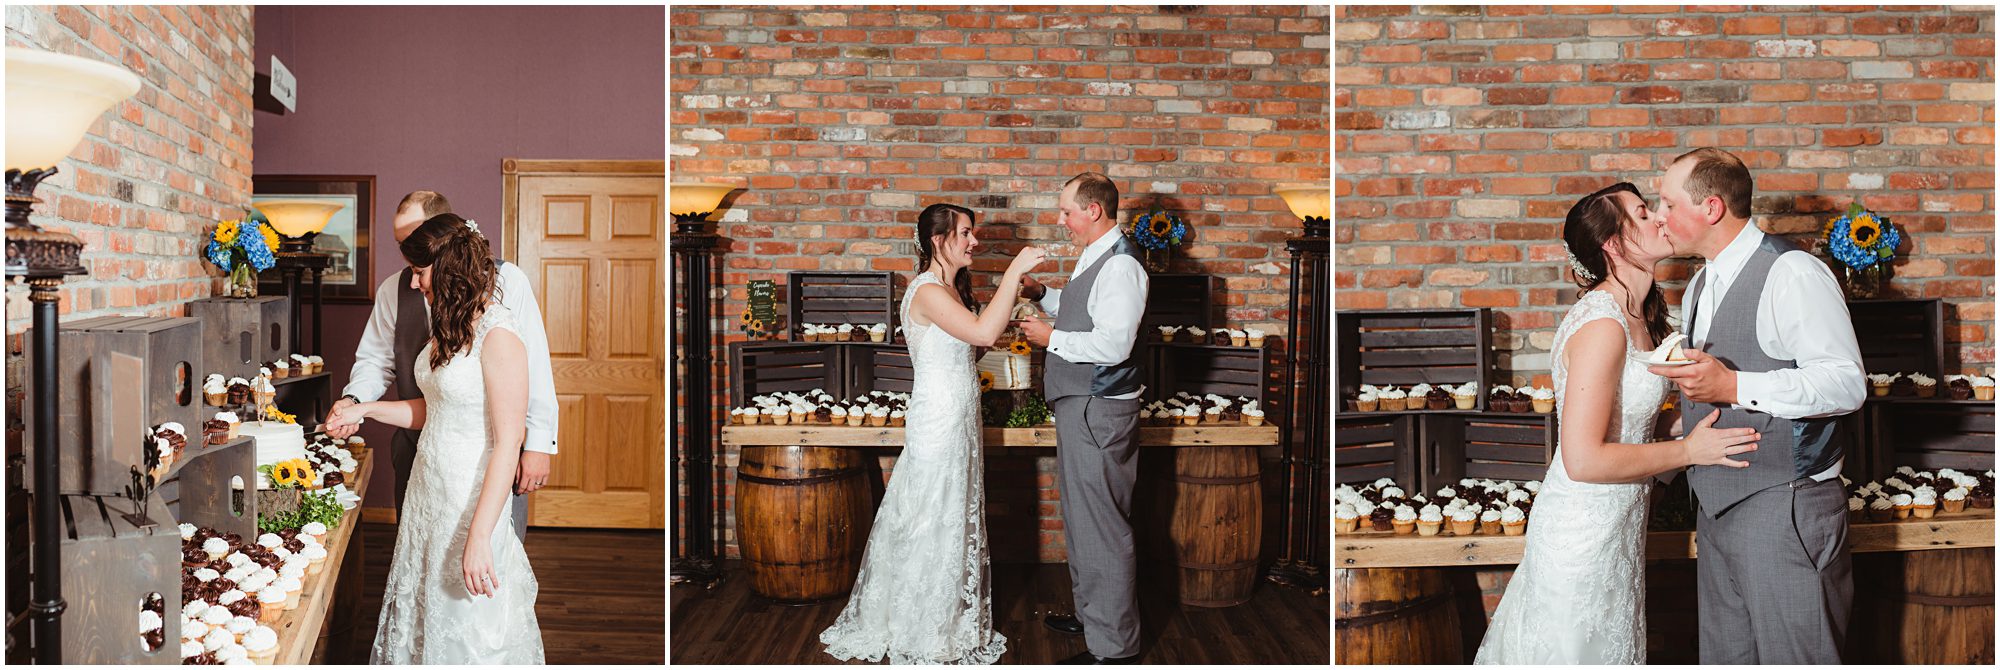 wedding reception, Lawton Community Center, MI- Laura Hollander Photography, southwest michigan wedding photographer